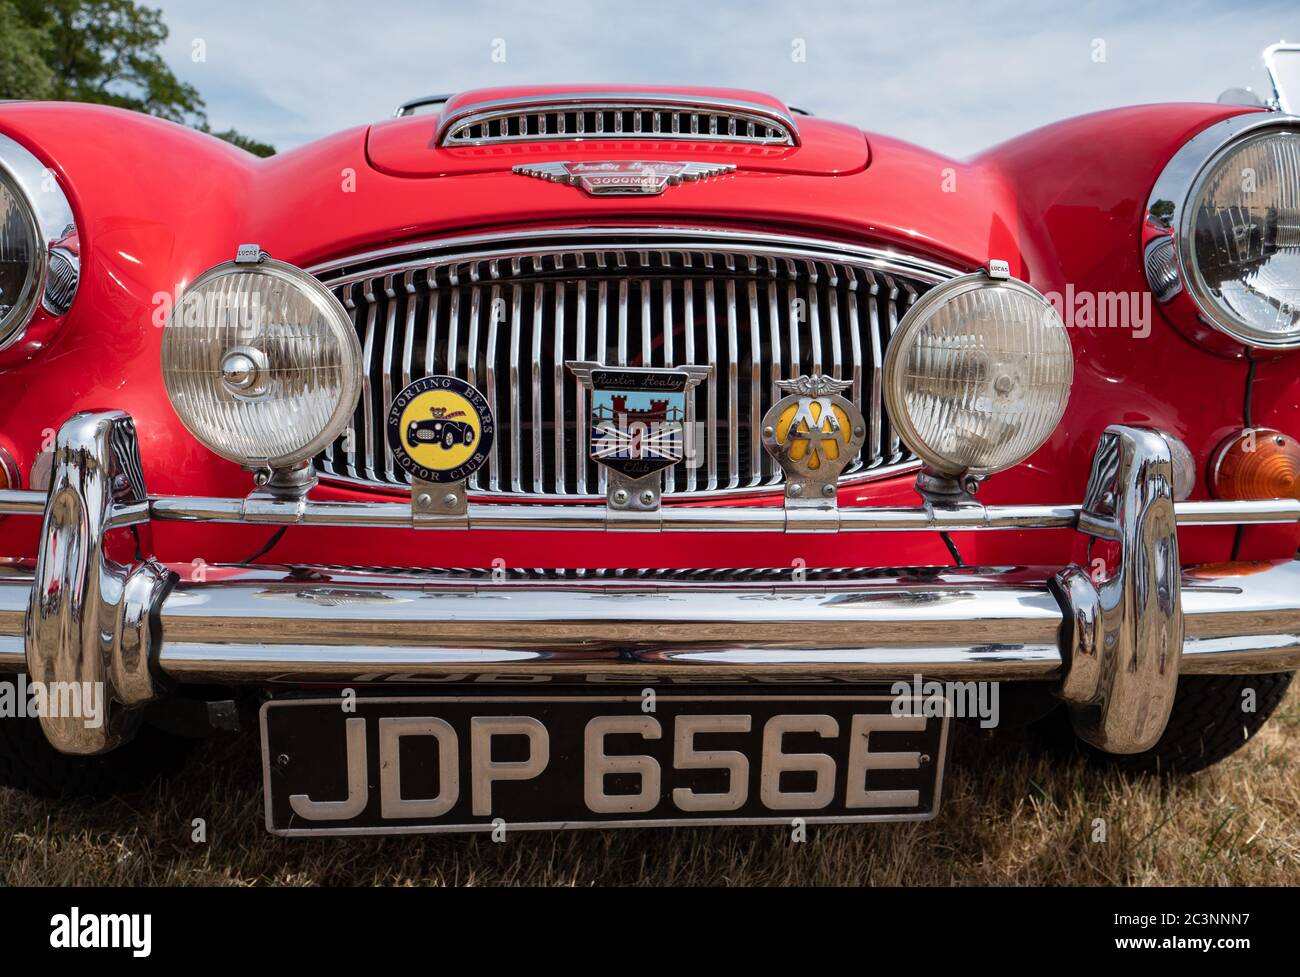 A classic Austin Healey 3000 Mklll on display at a village fete Warwickshire England UK Stock Photo